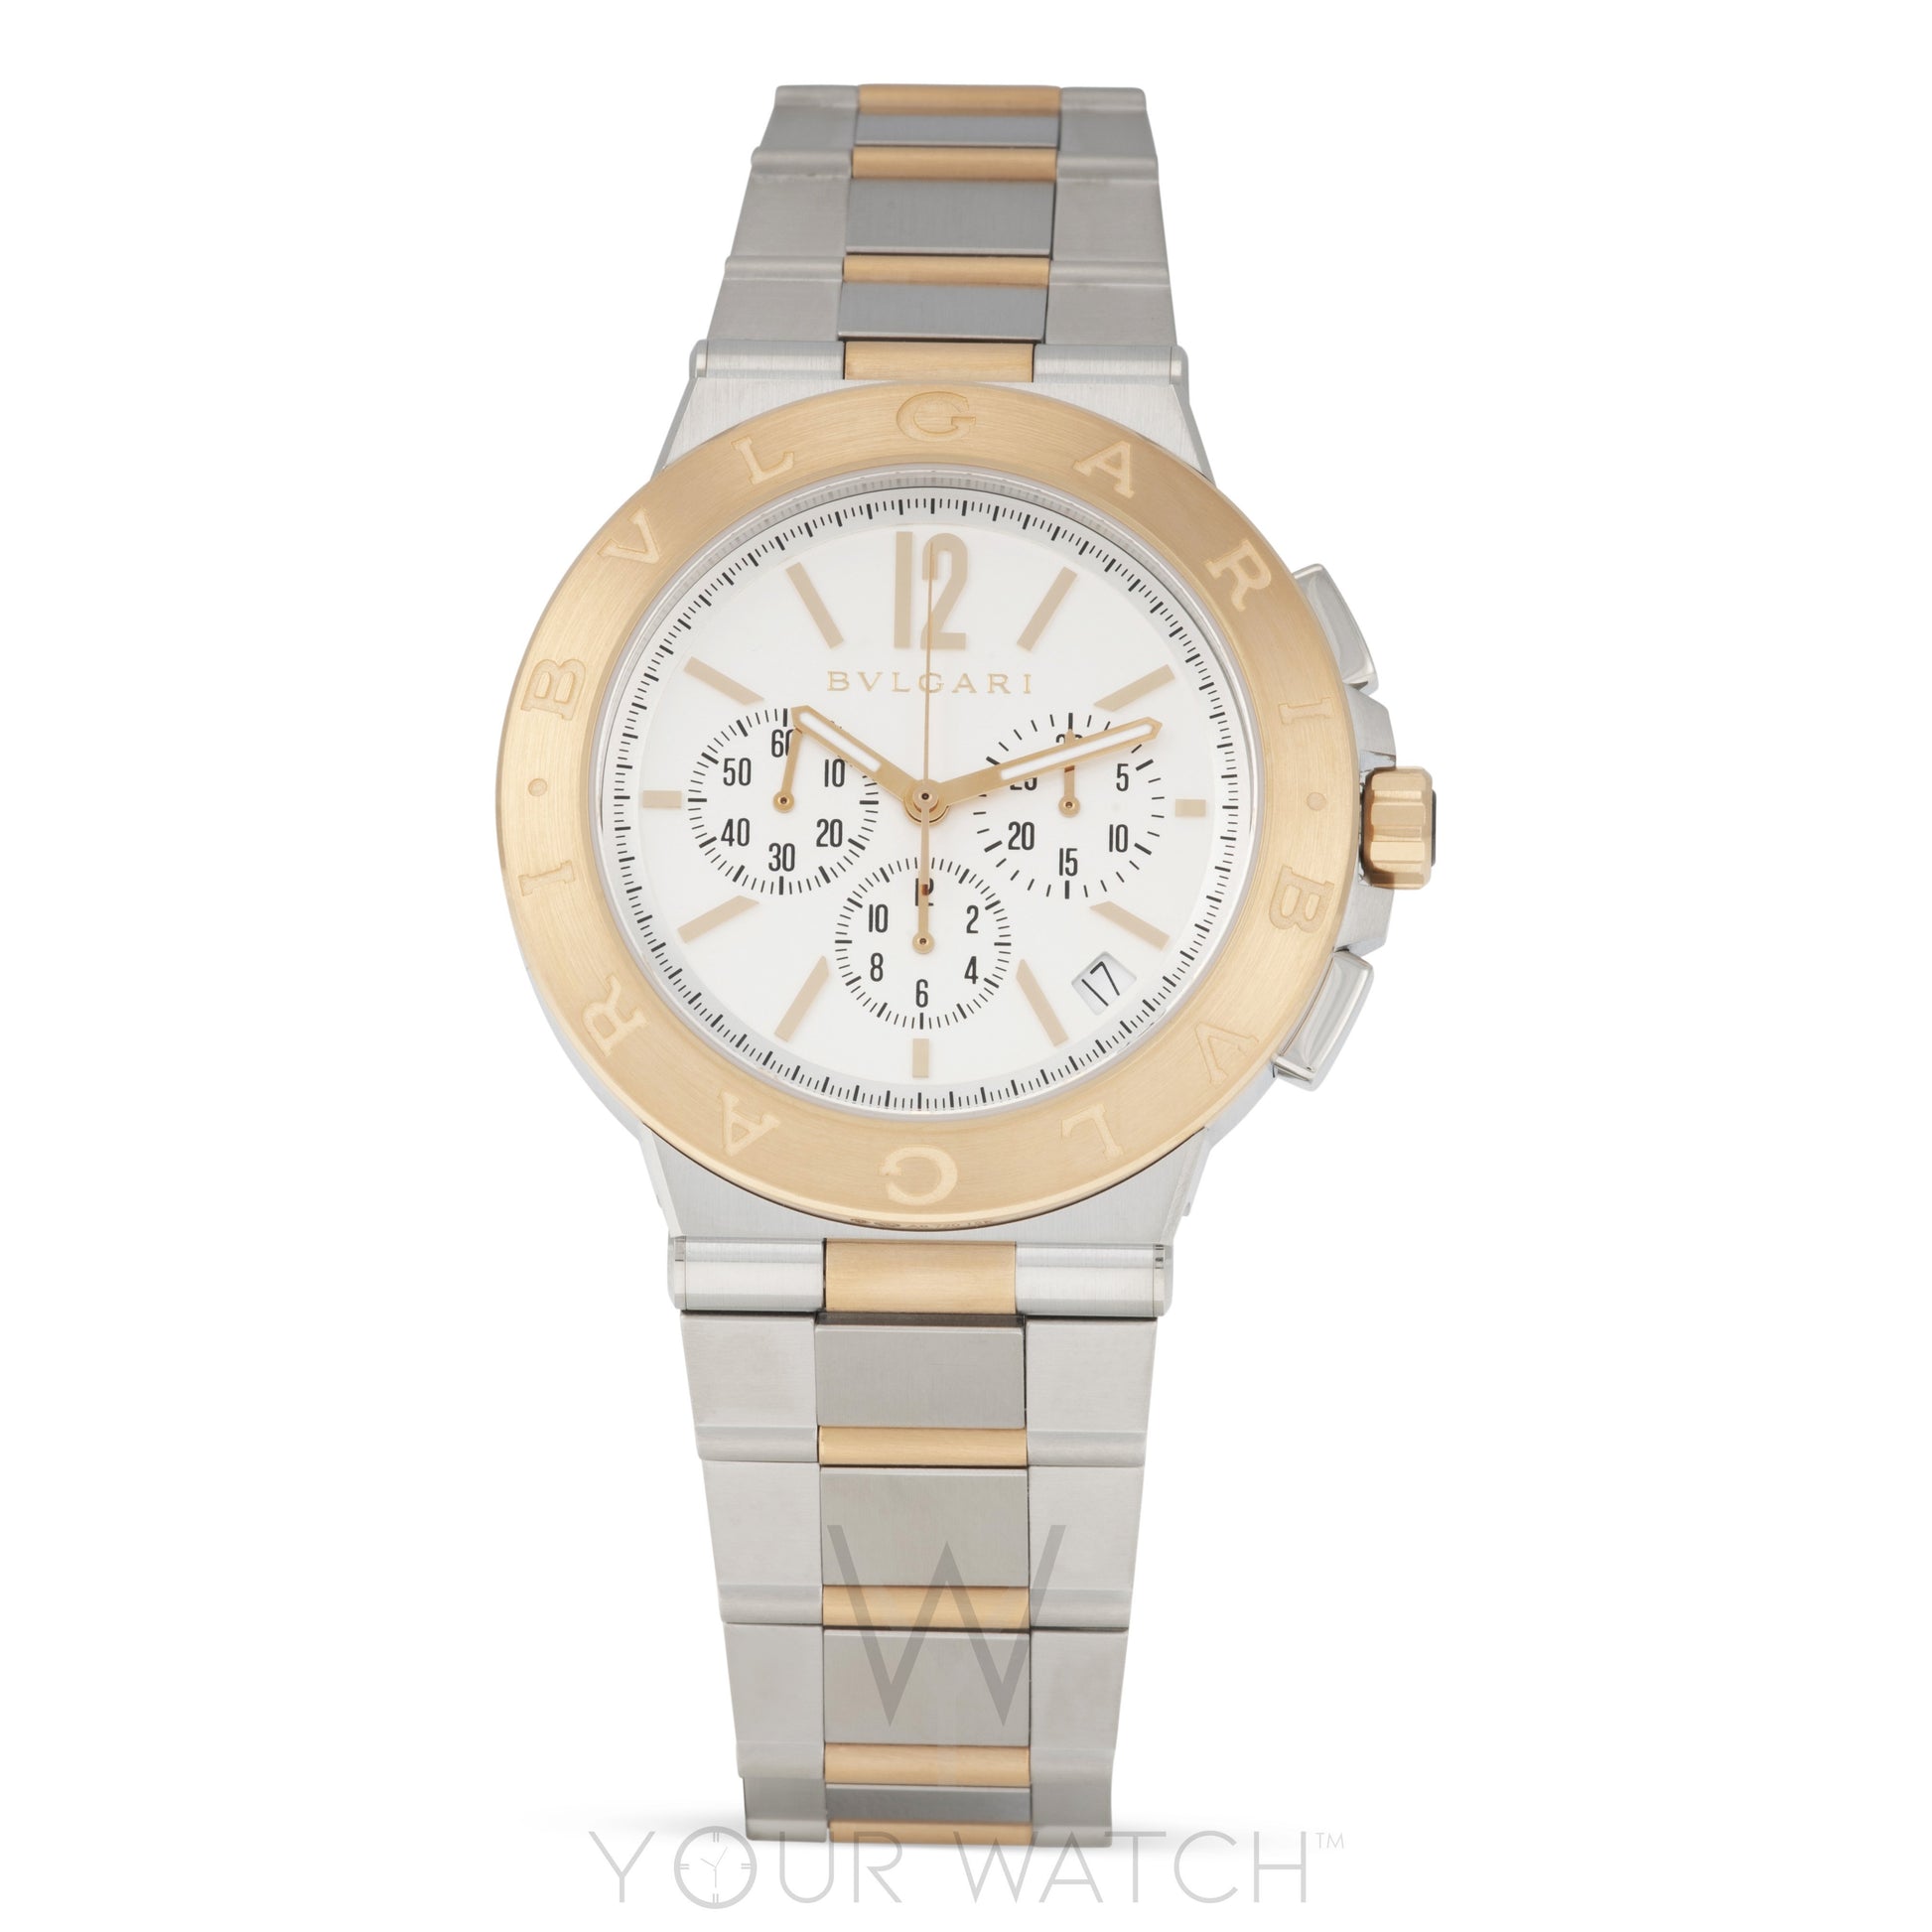 Bvlgari Diagono Chronograph Automatic Men's Watch 102332